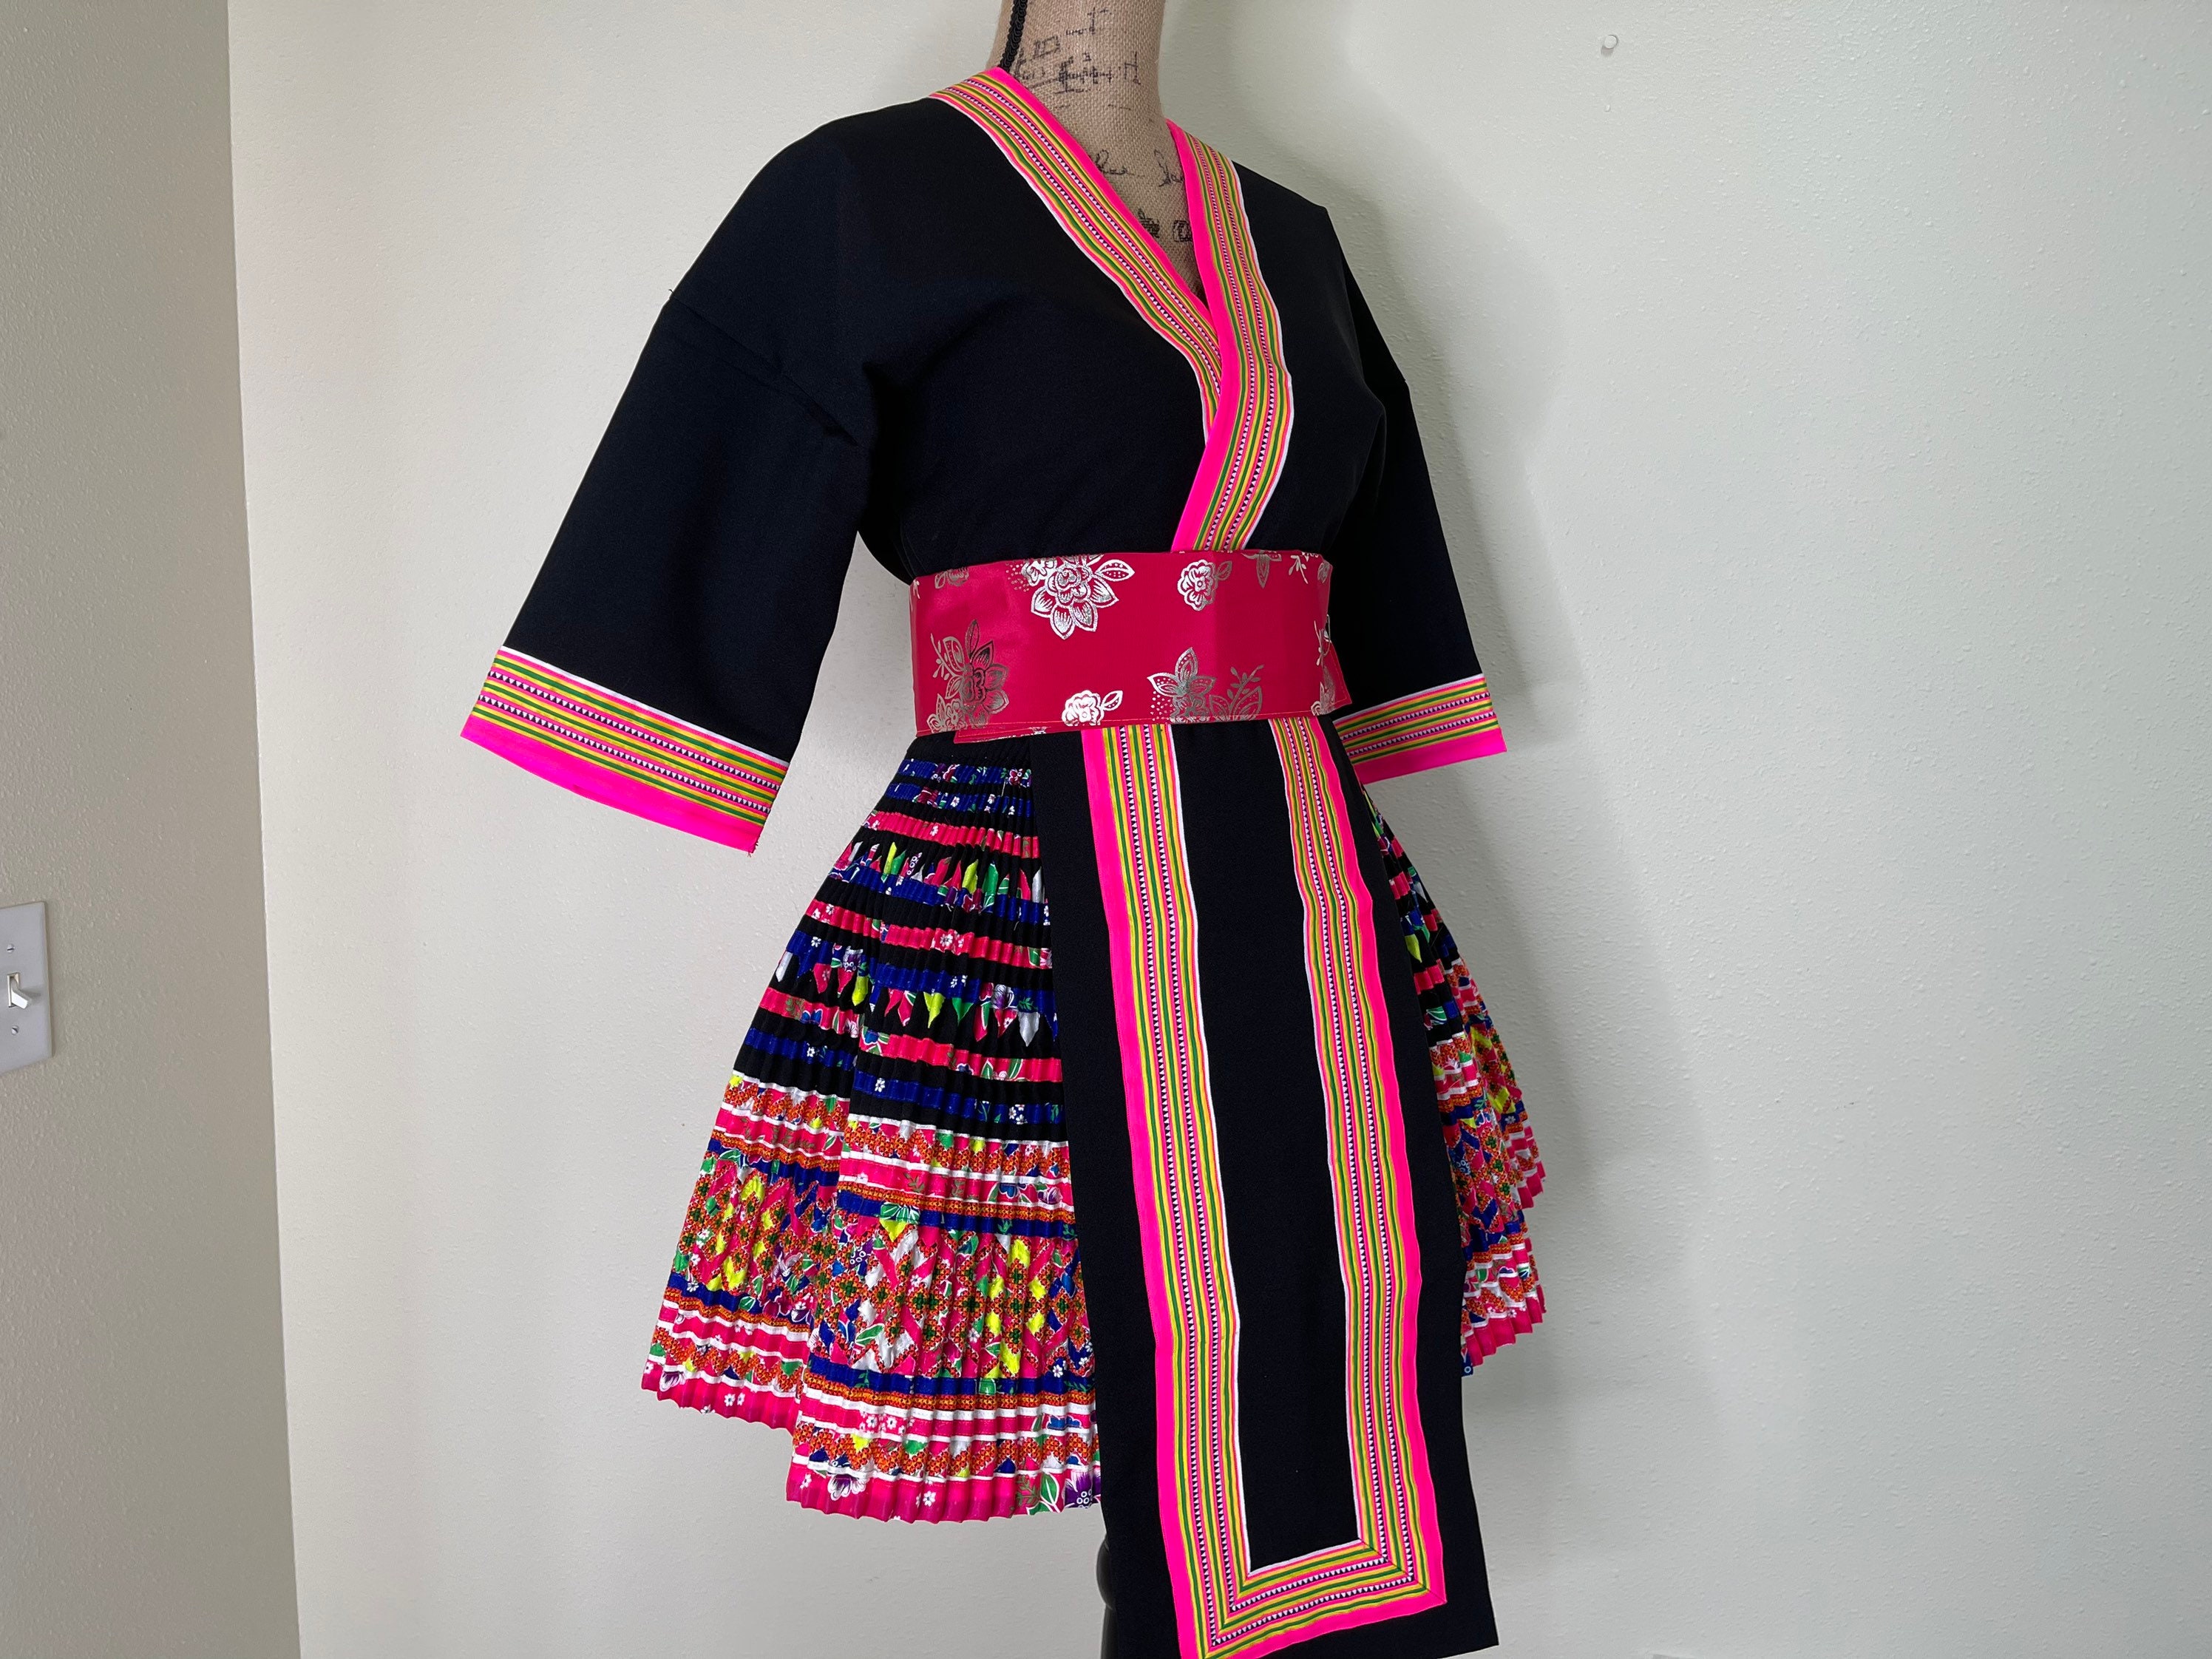 L 1 Size 40 Adult Hmong Outfit Hmong Clothes